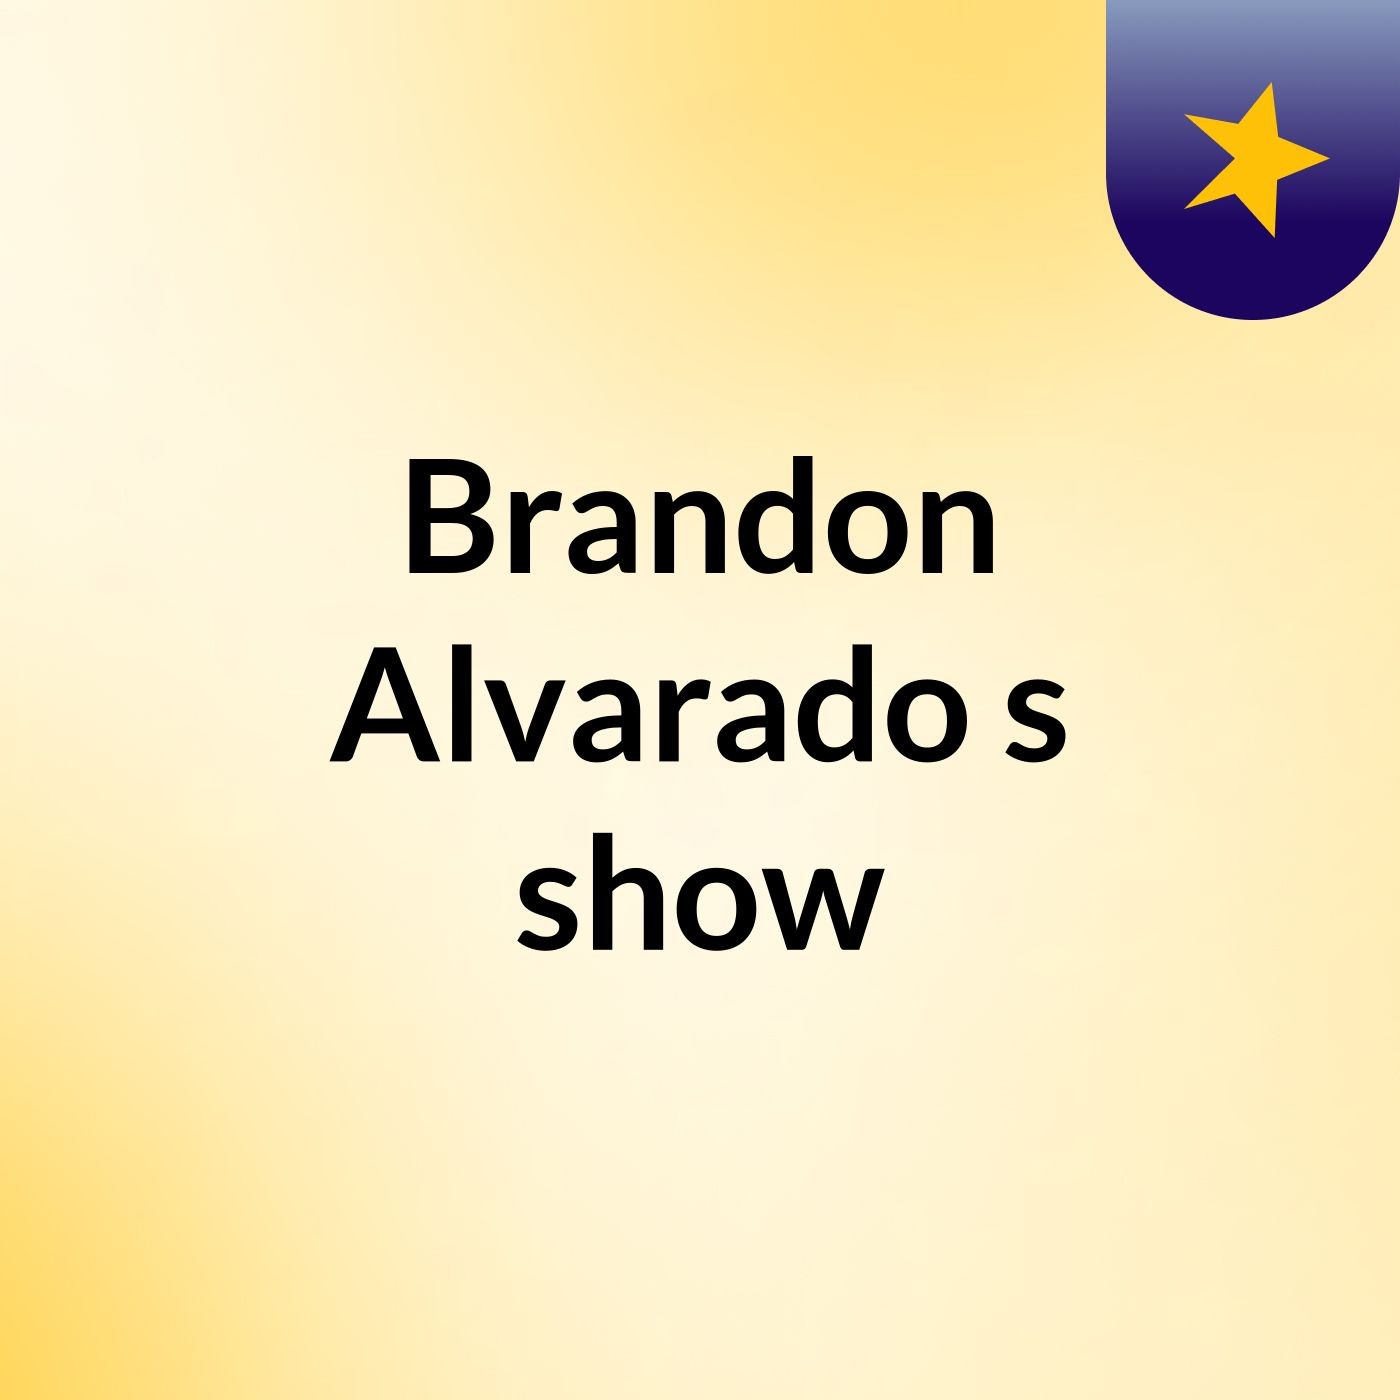 Brandon Alvarado's show